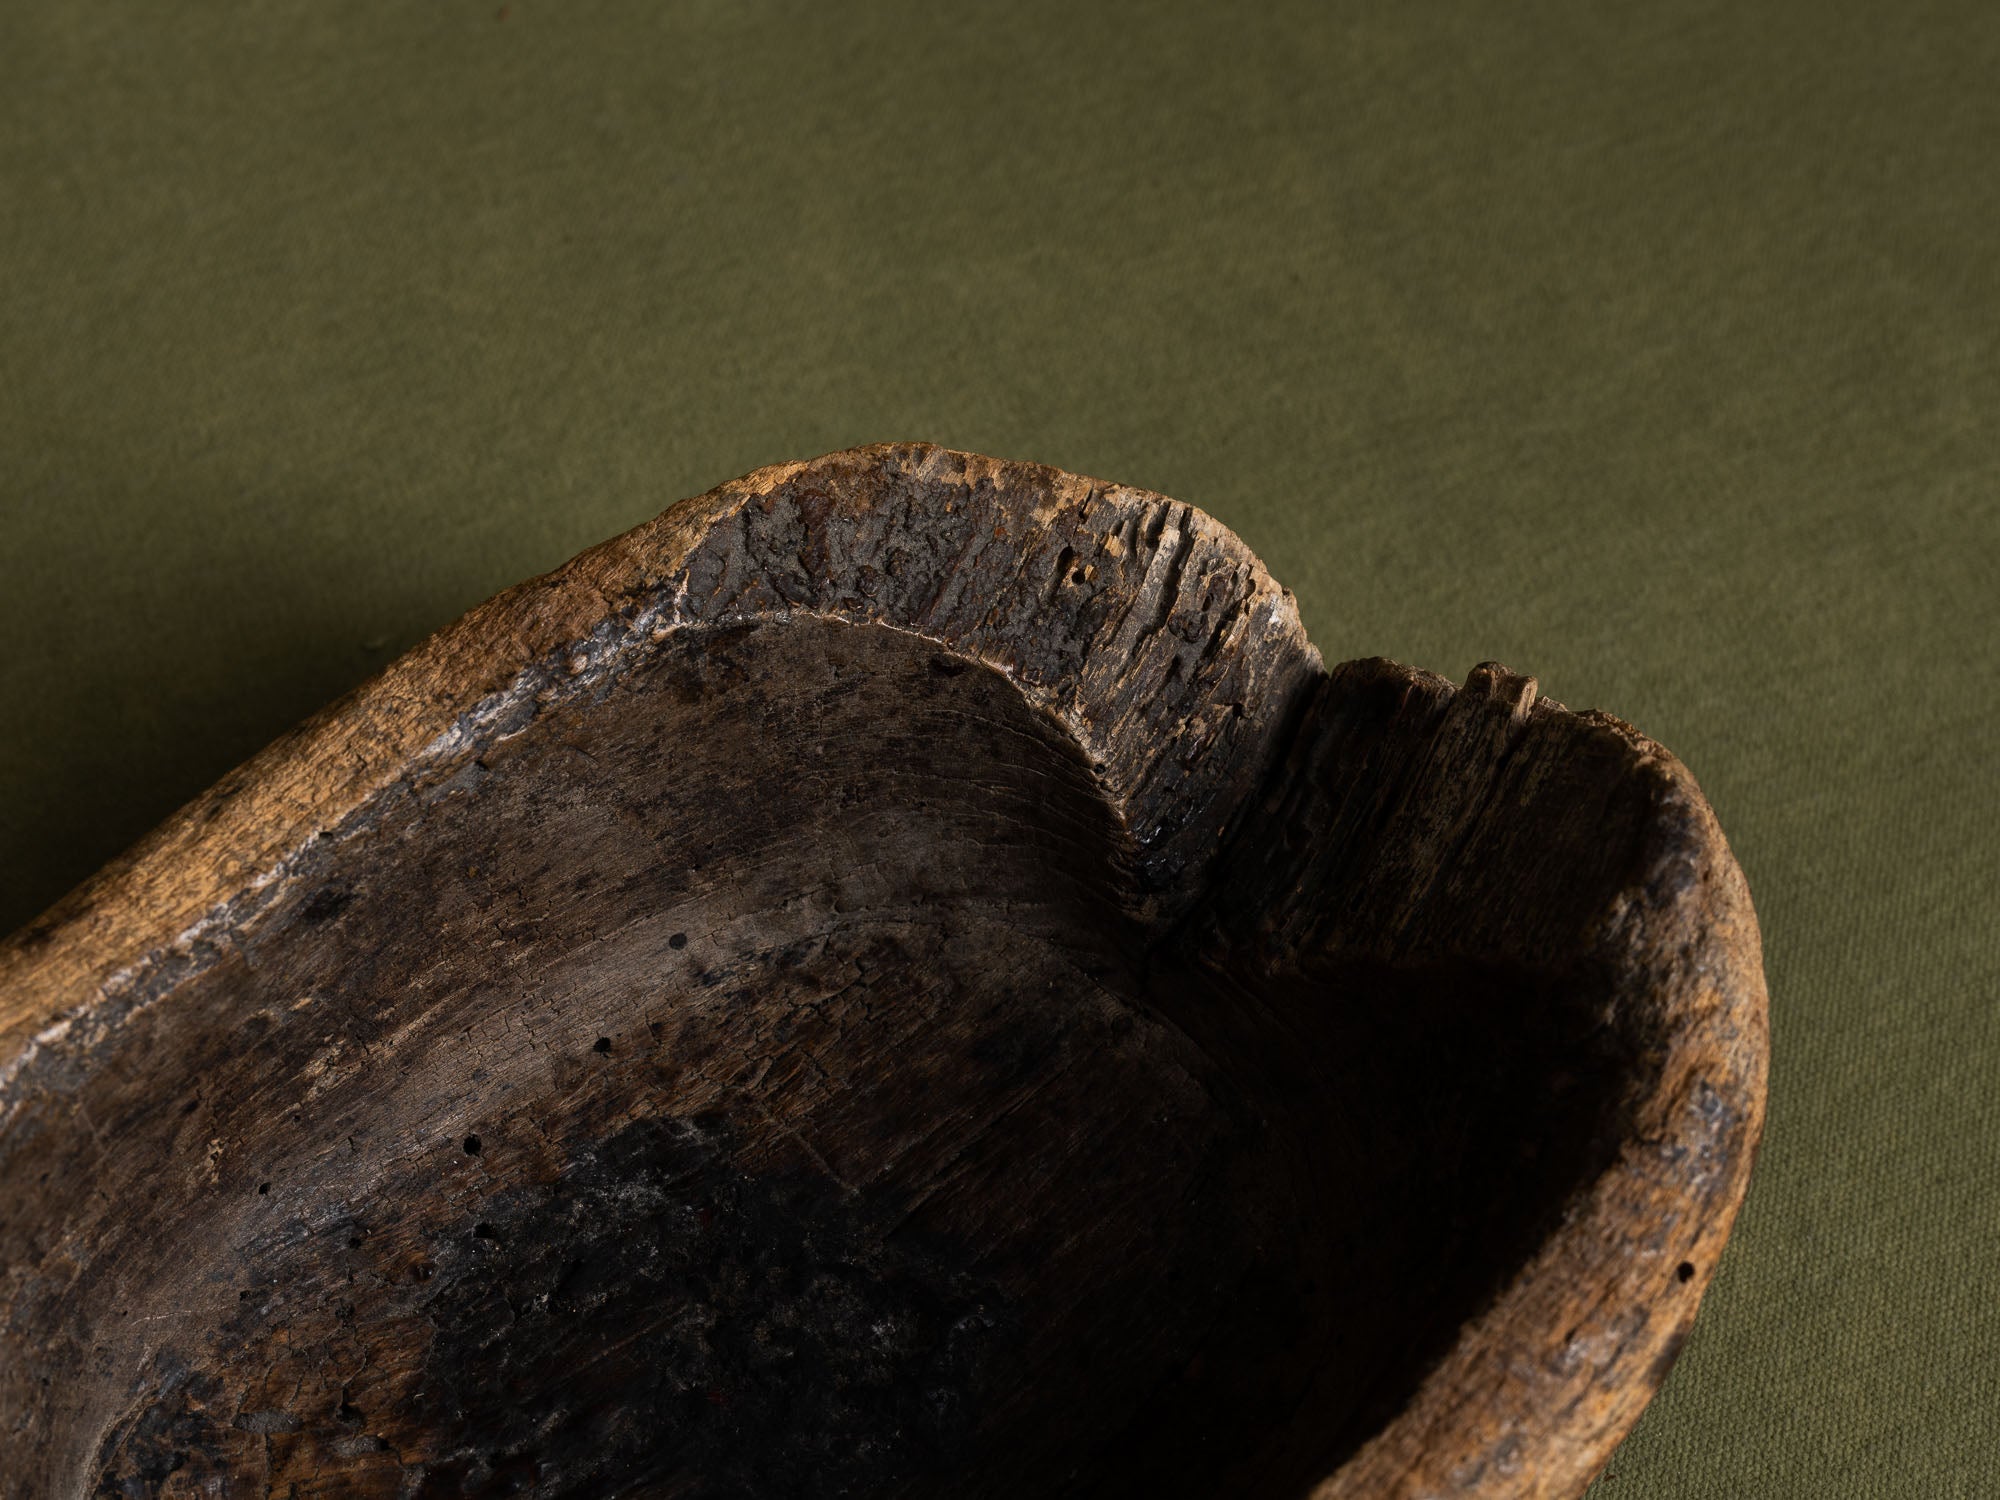 Coupe / écuelle monoxyle normande en noyer, art paysan, France (Fin XVIIIe/ début XIXe siècle)..Free form carved Norman wooden bowl, Peasant art, France (Late 18th / early 19th century)